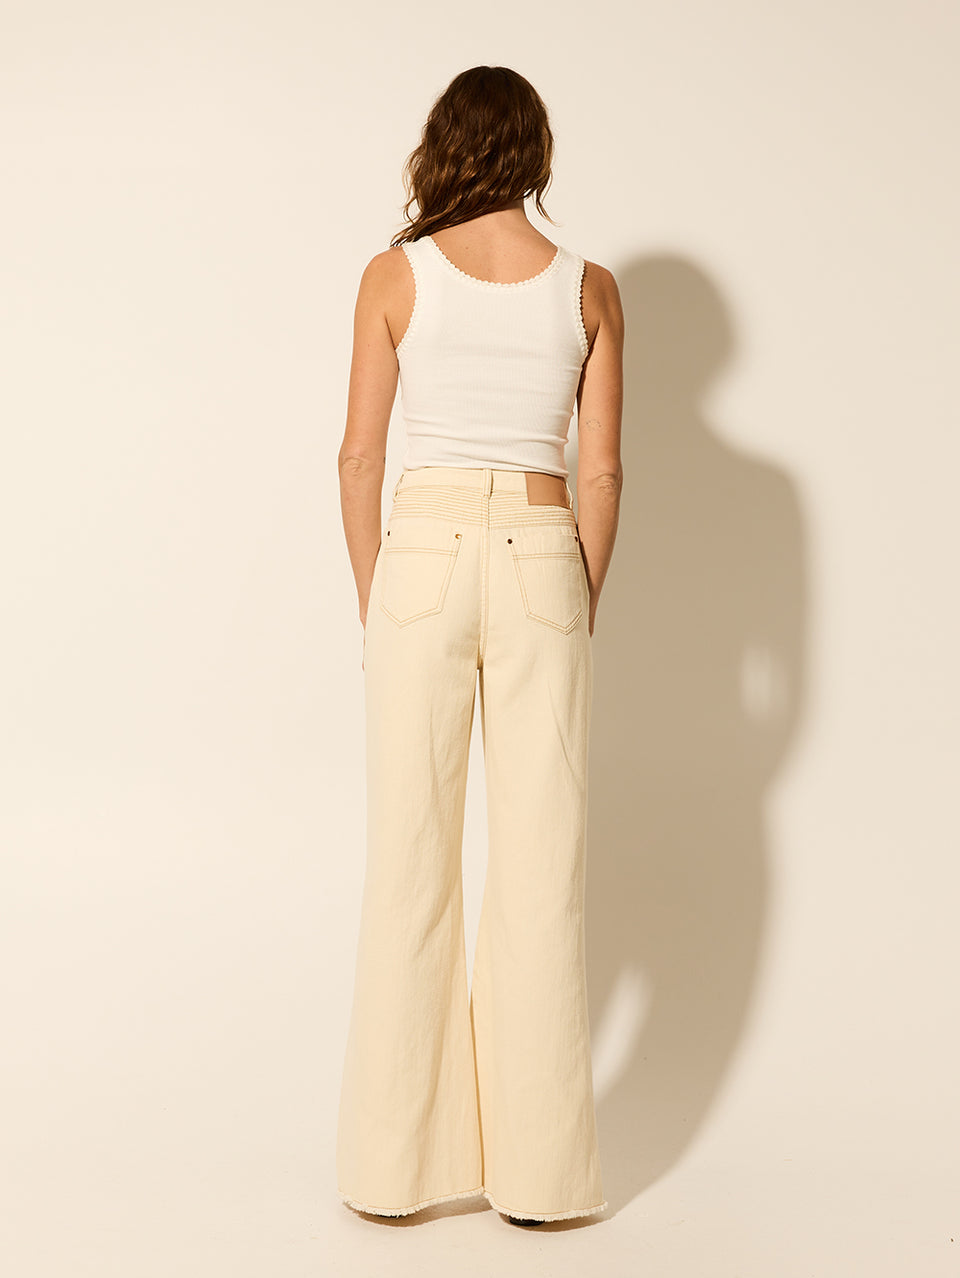 Elena Jean Cream KIVARI | Model wears cream jean back view